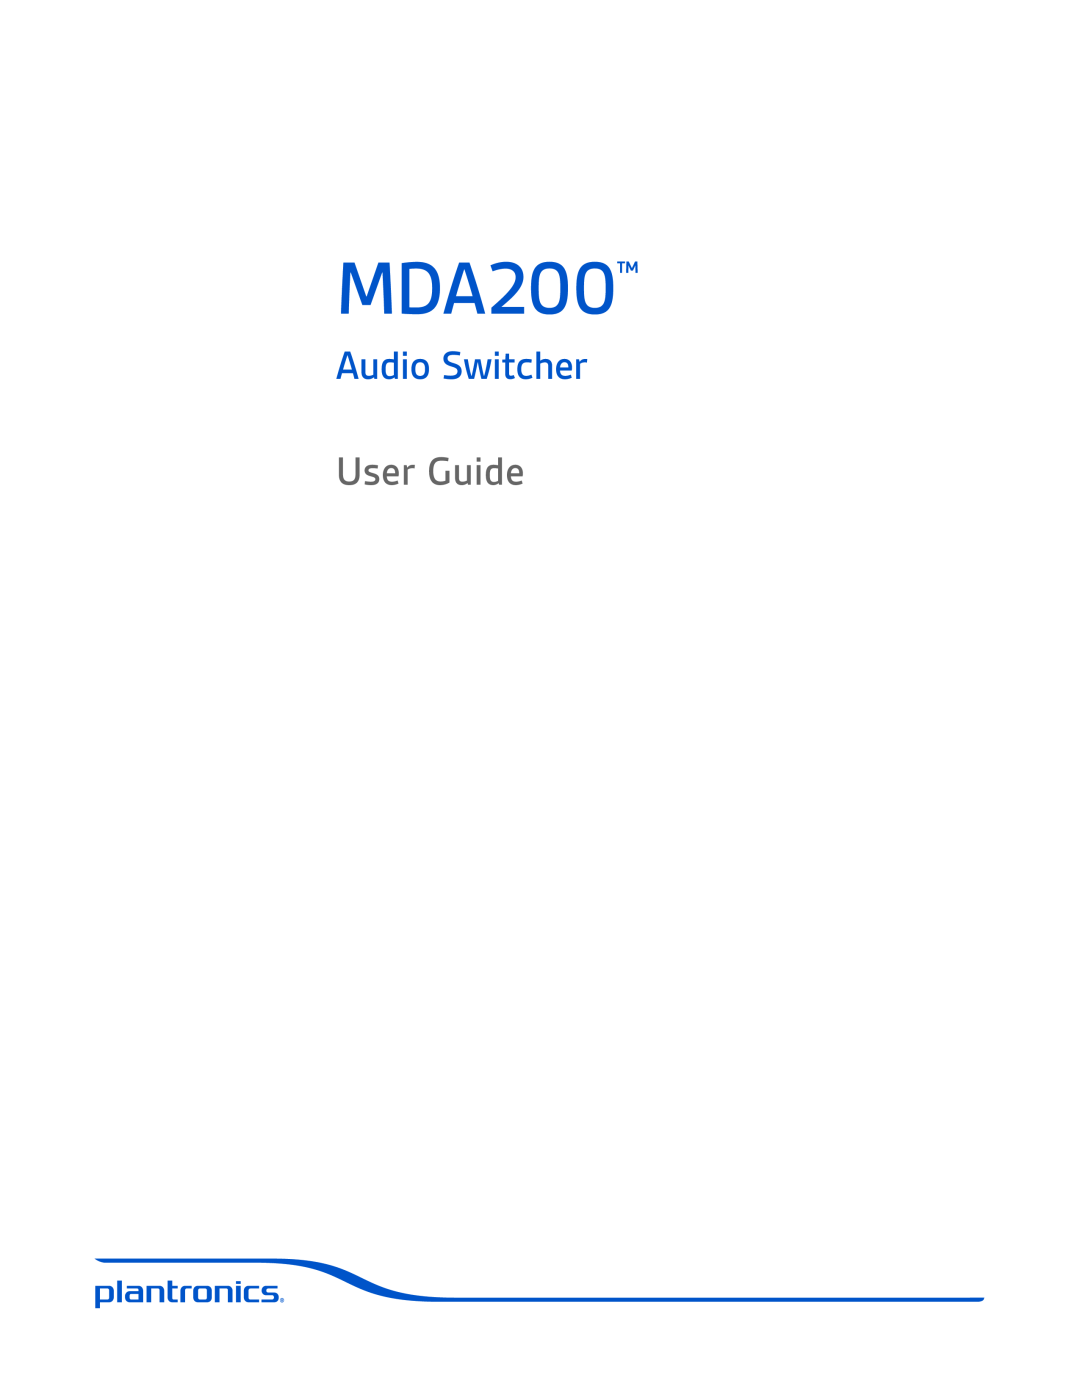 Plantronics mda200 manual MDA200, Audio Switcher, User Guide 